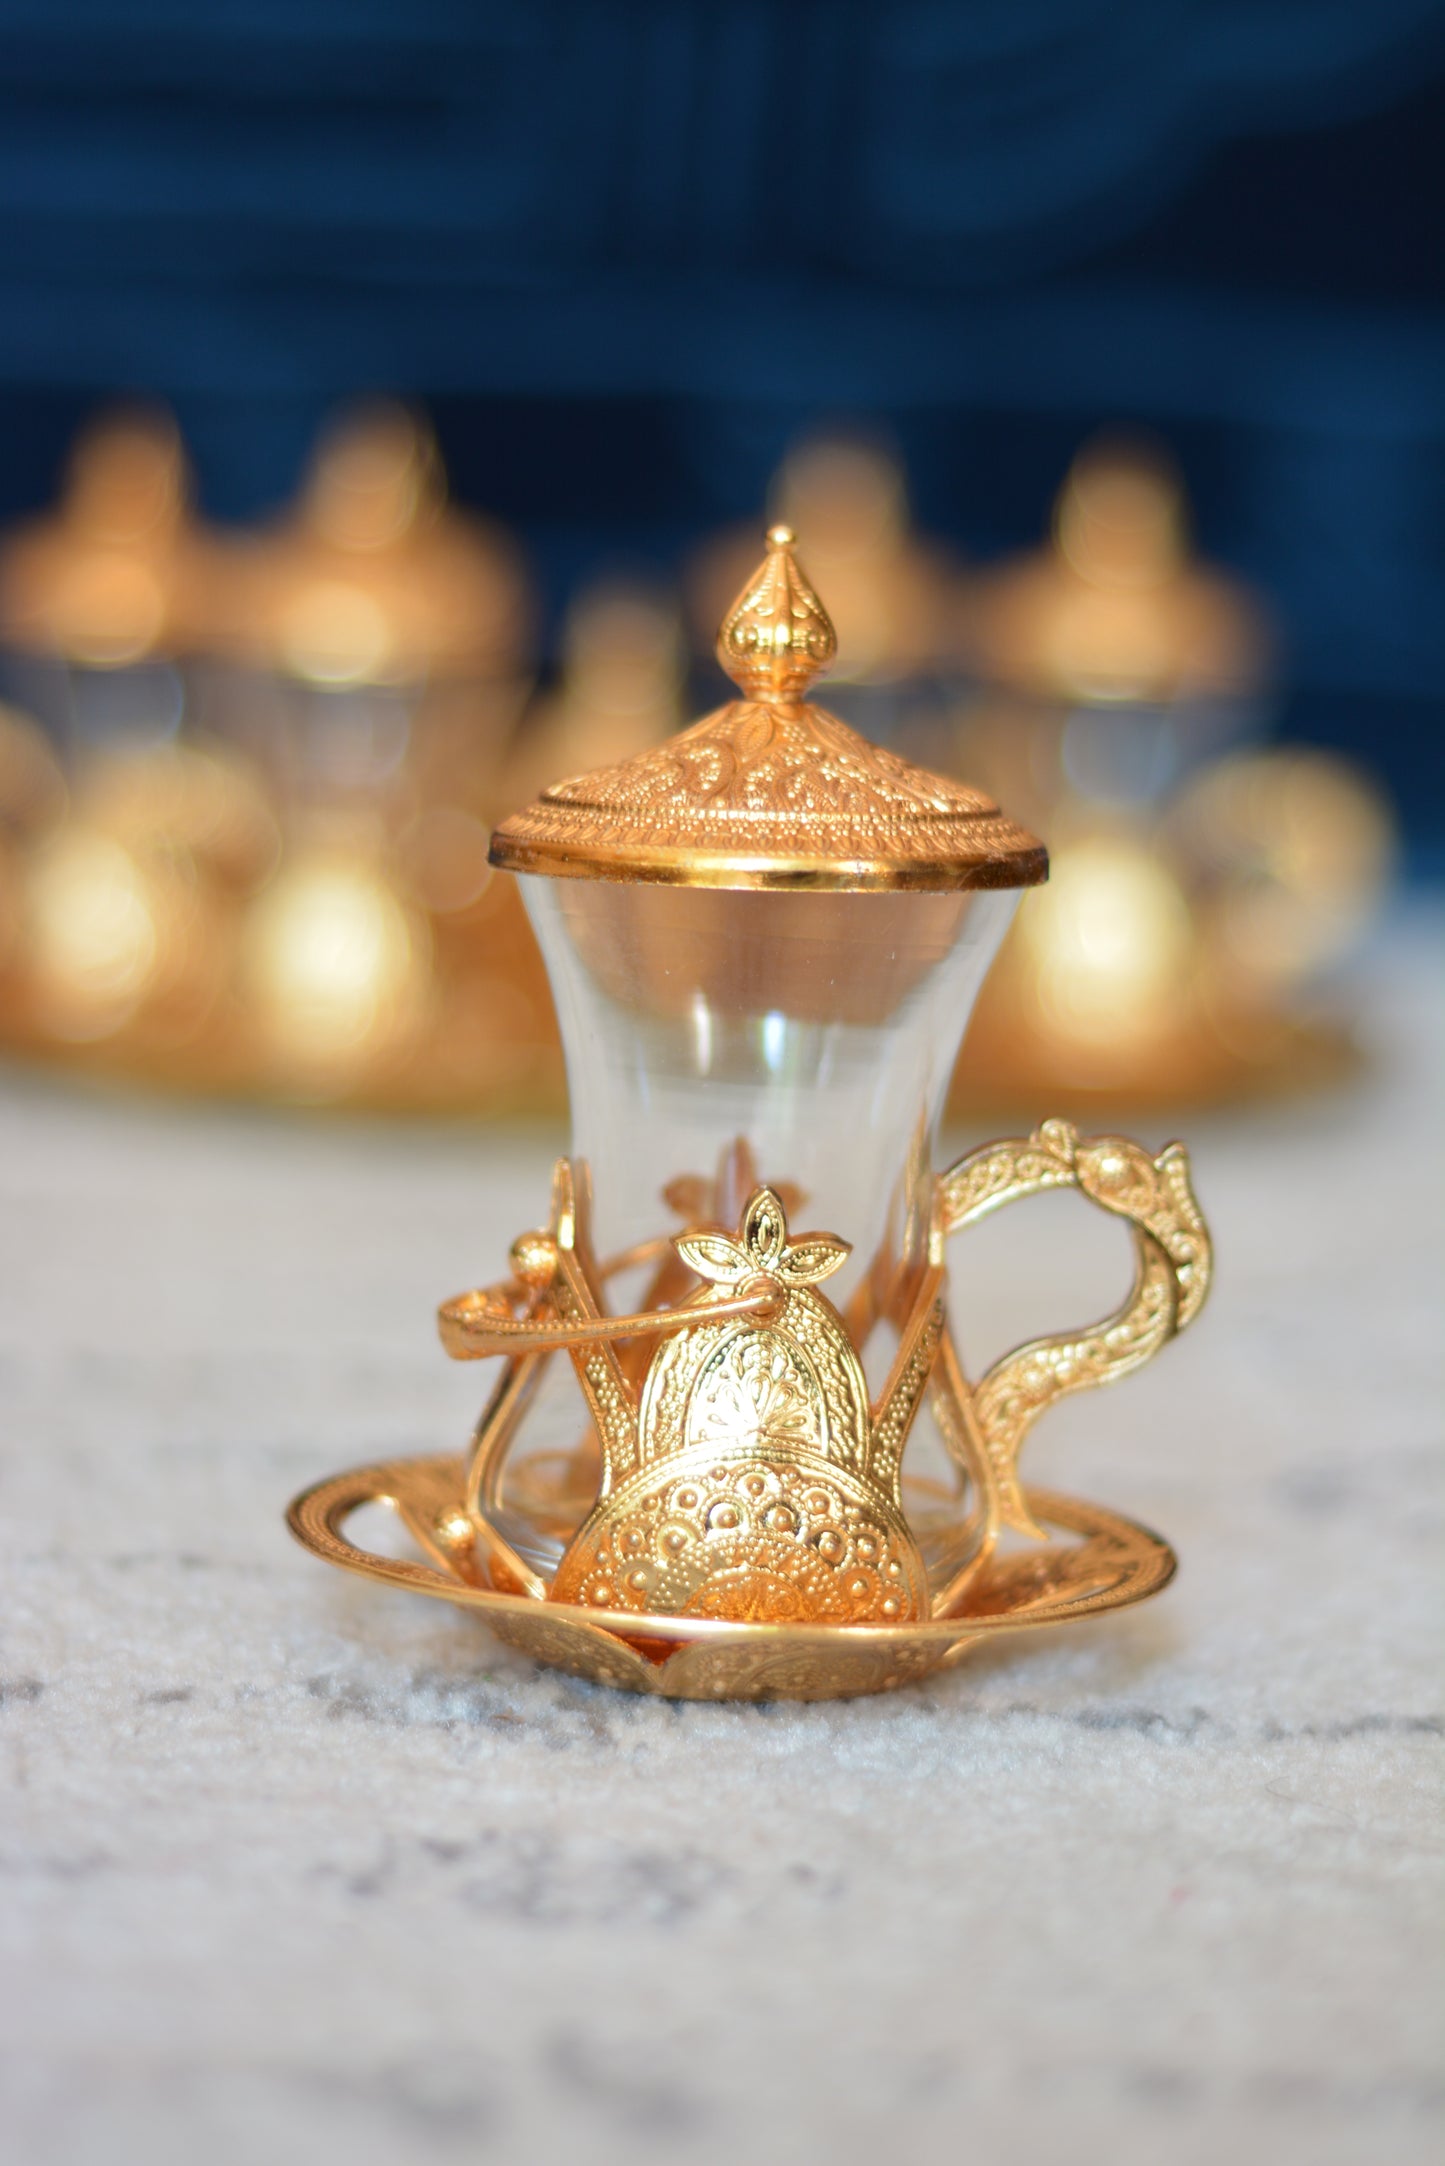 Gold Turkish Tea Cups with Ottoman Design- Serves 6